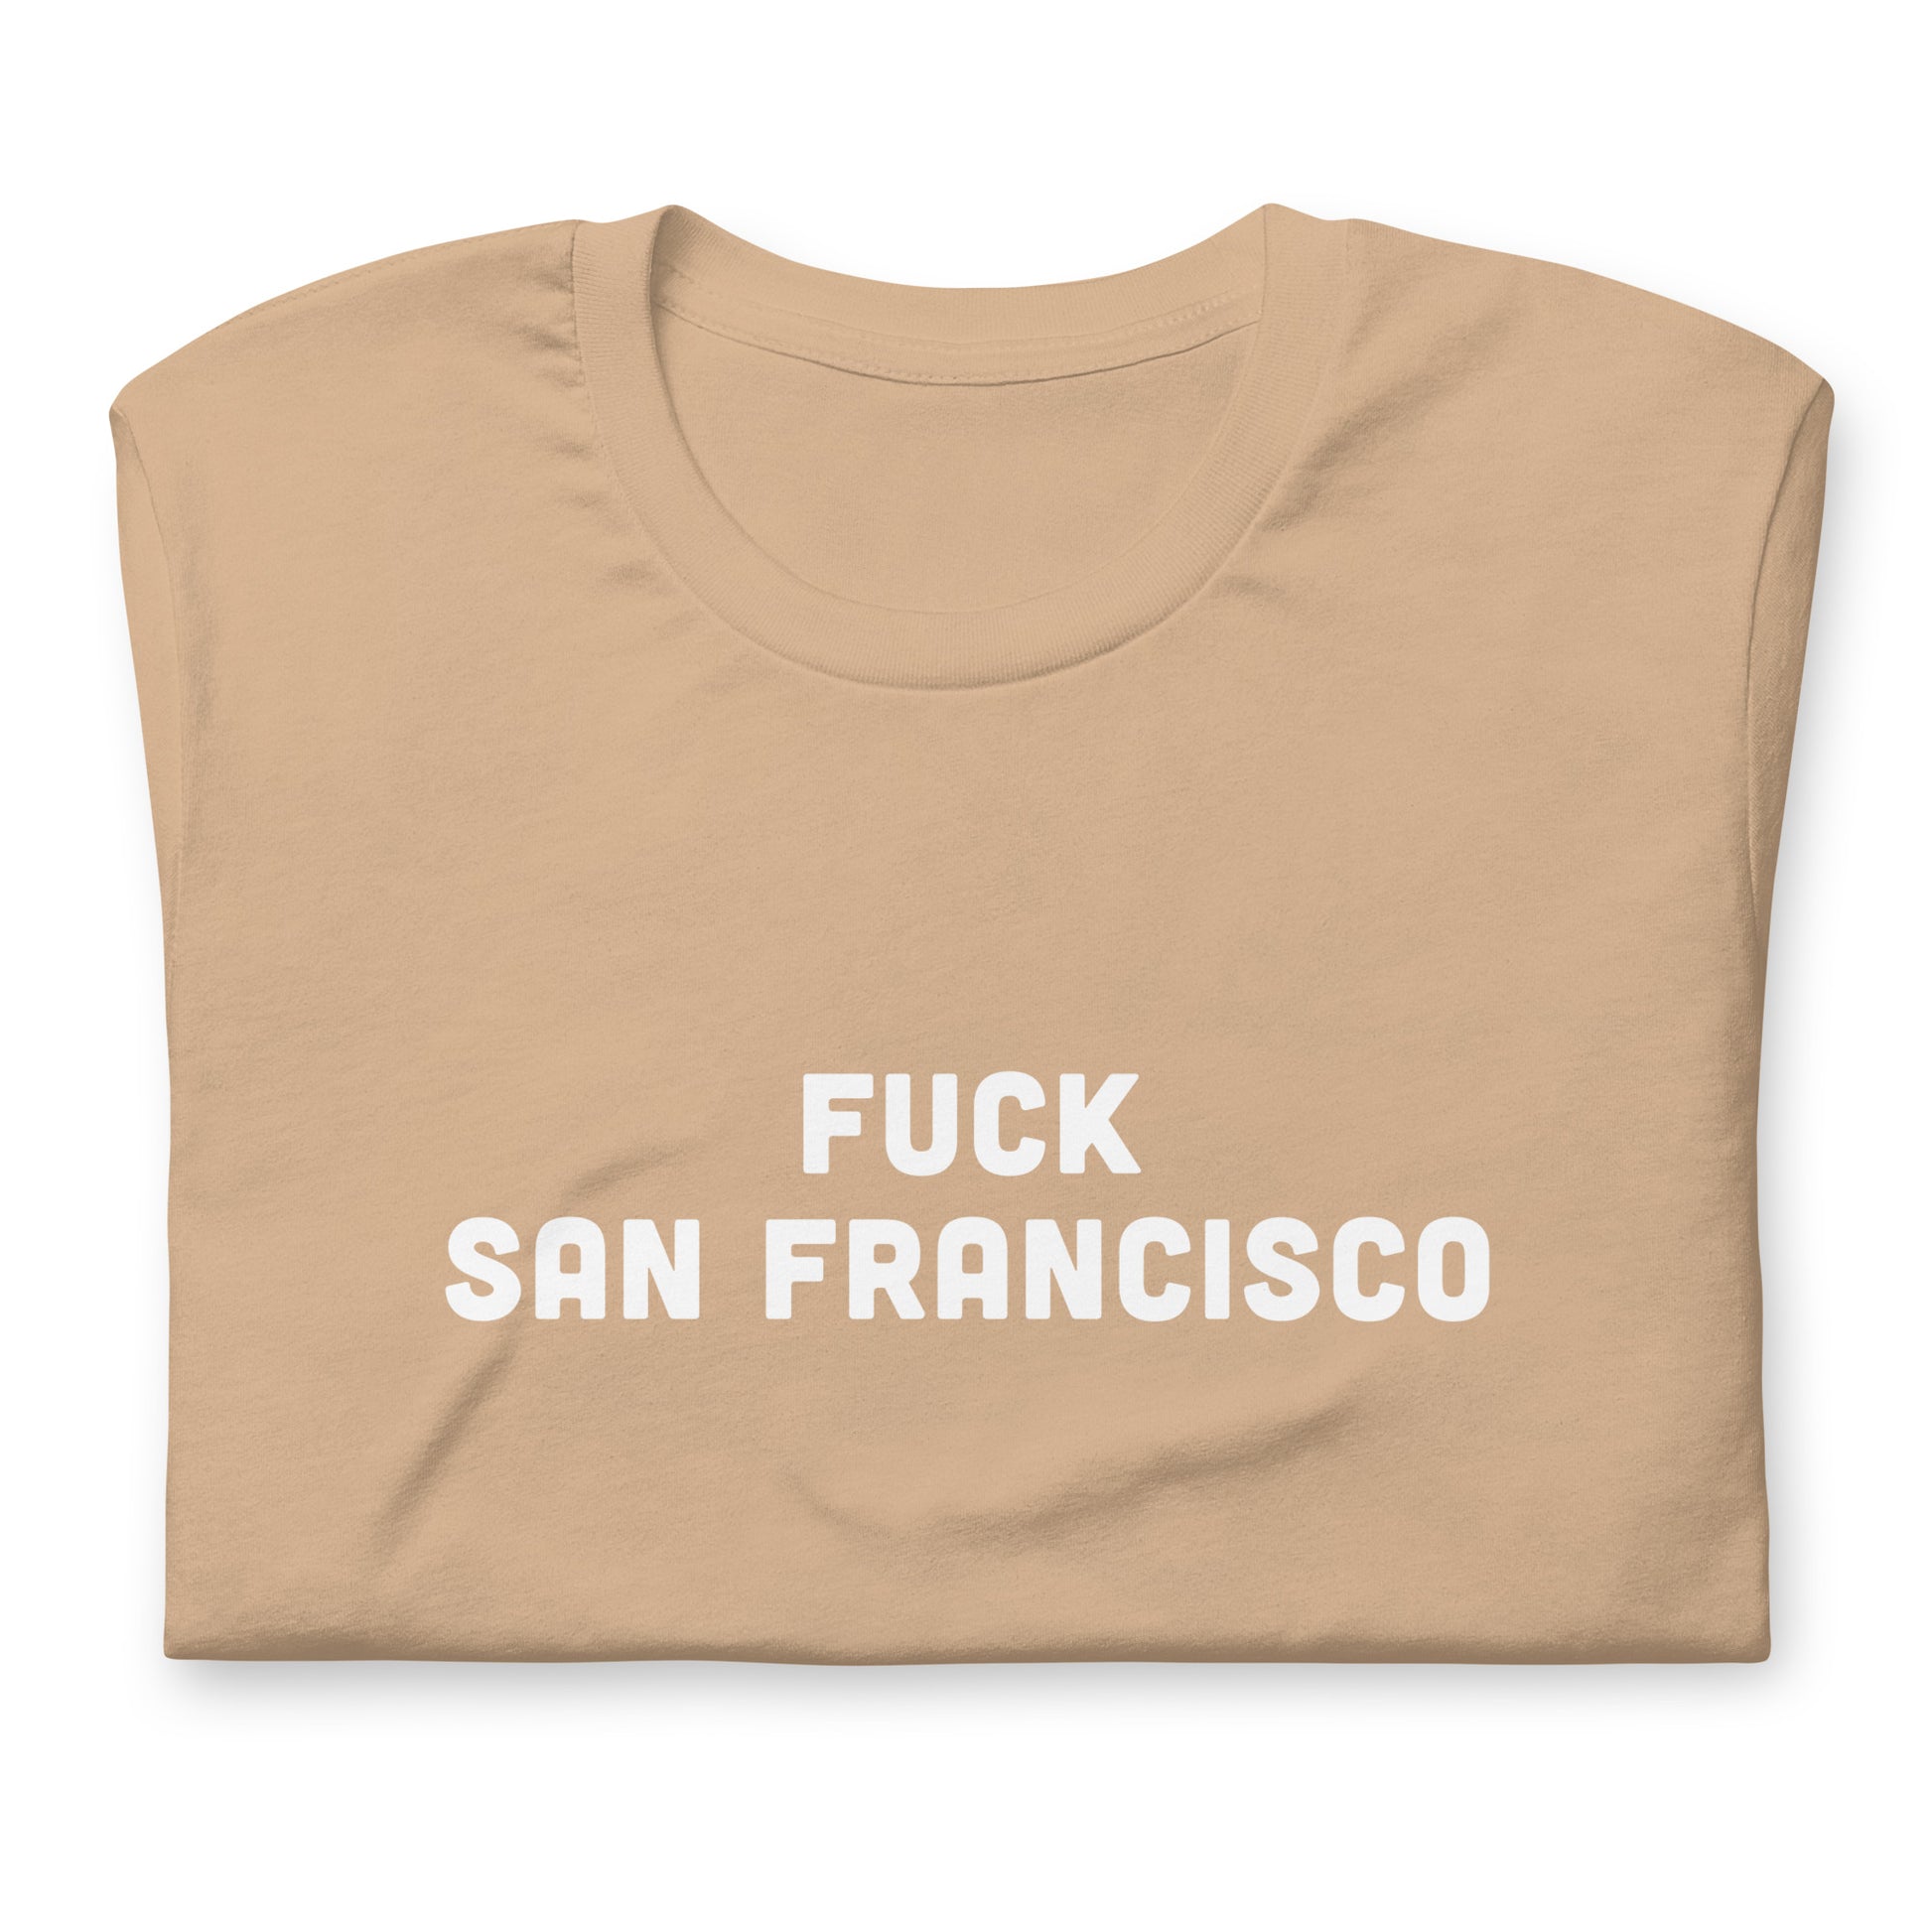 Fuck San Francisco T-Shirt Size XL Color Forest